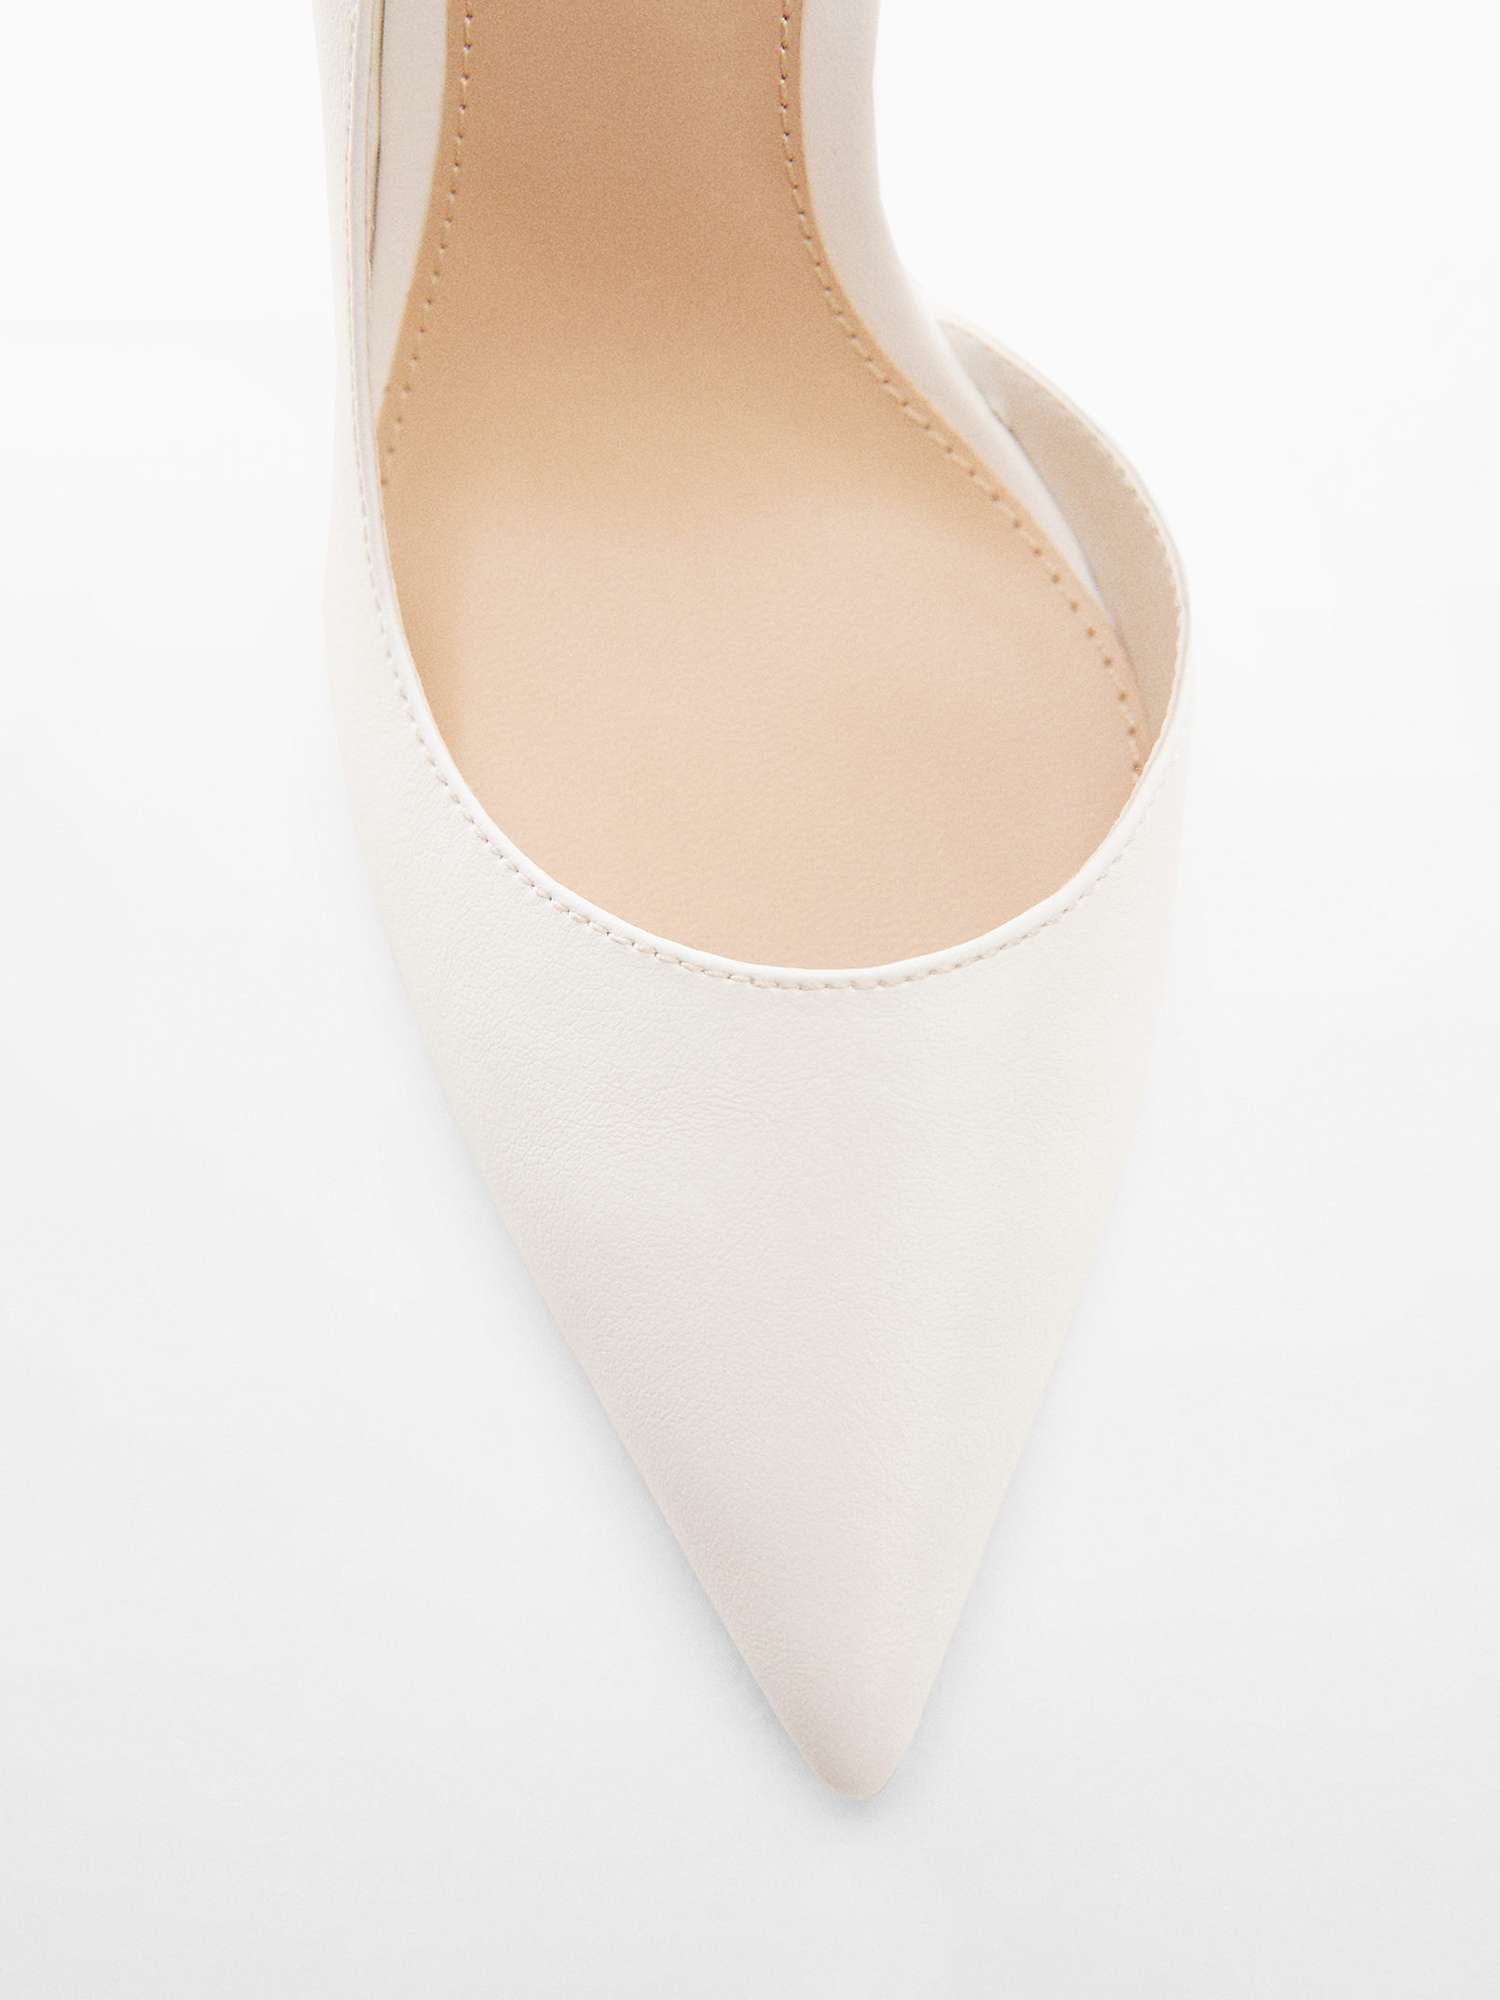 Buy Mango Audrey Asymmetrical Court Shoes, White Online at johnlewis.com